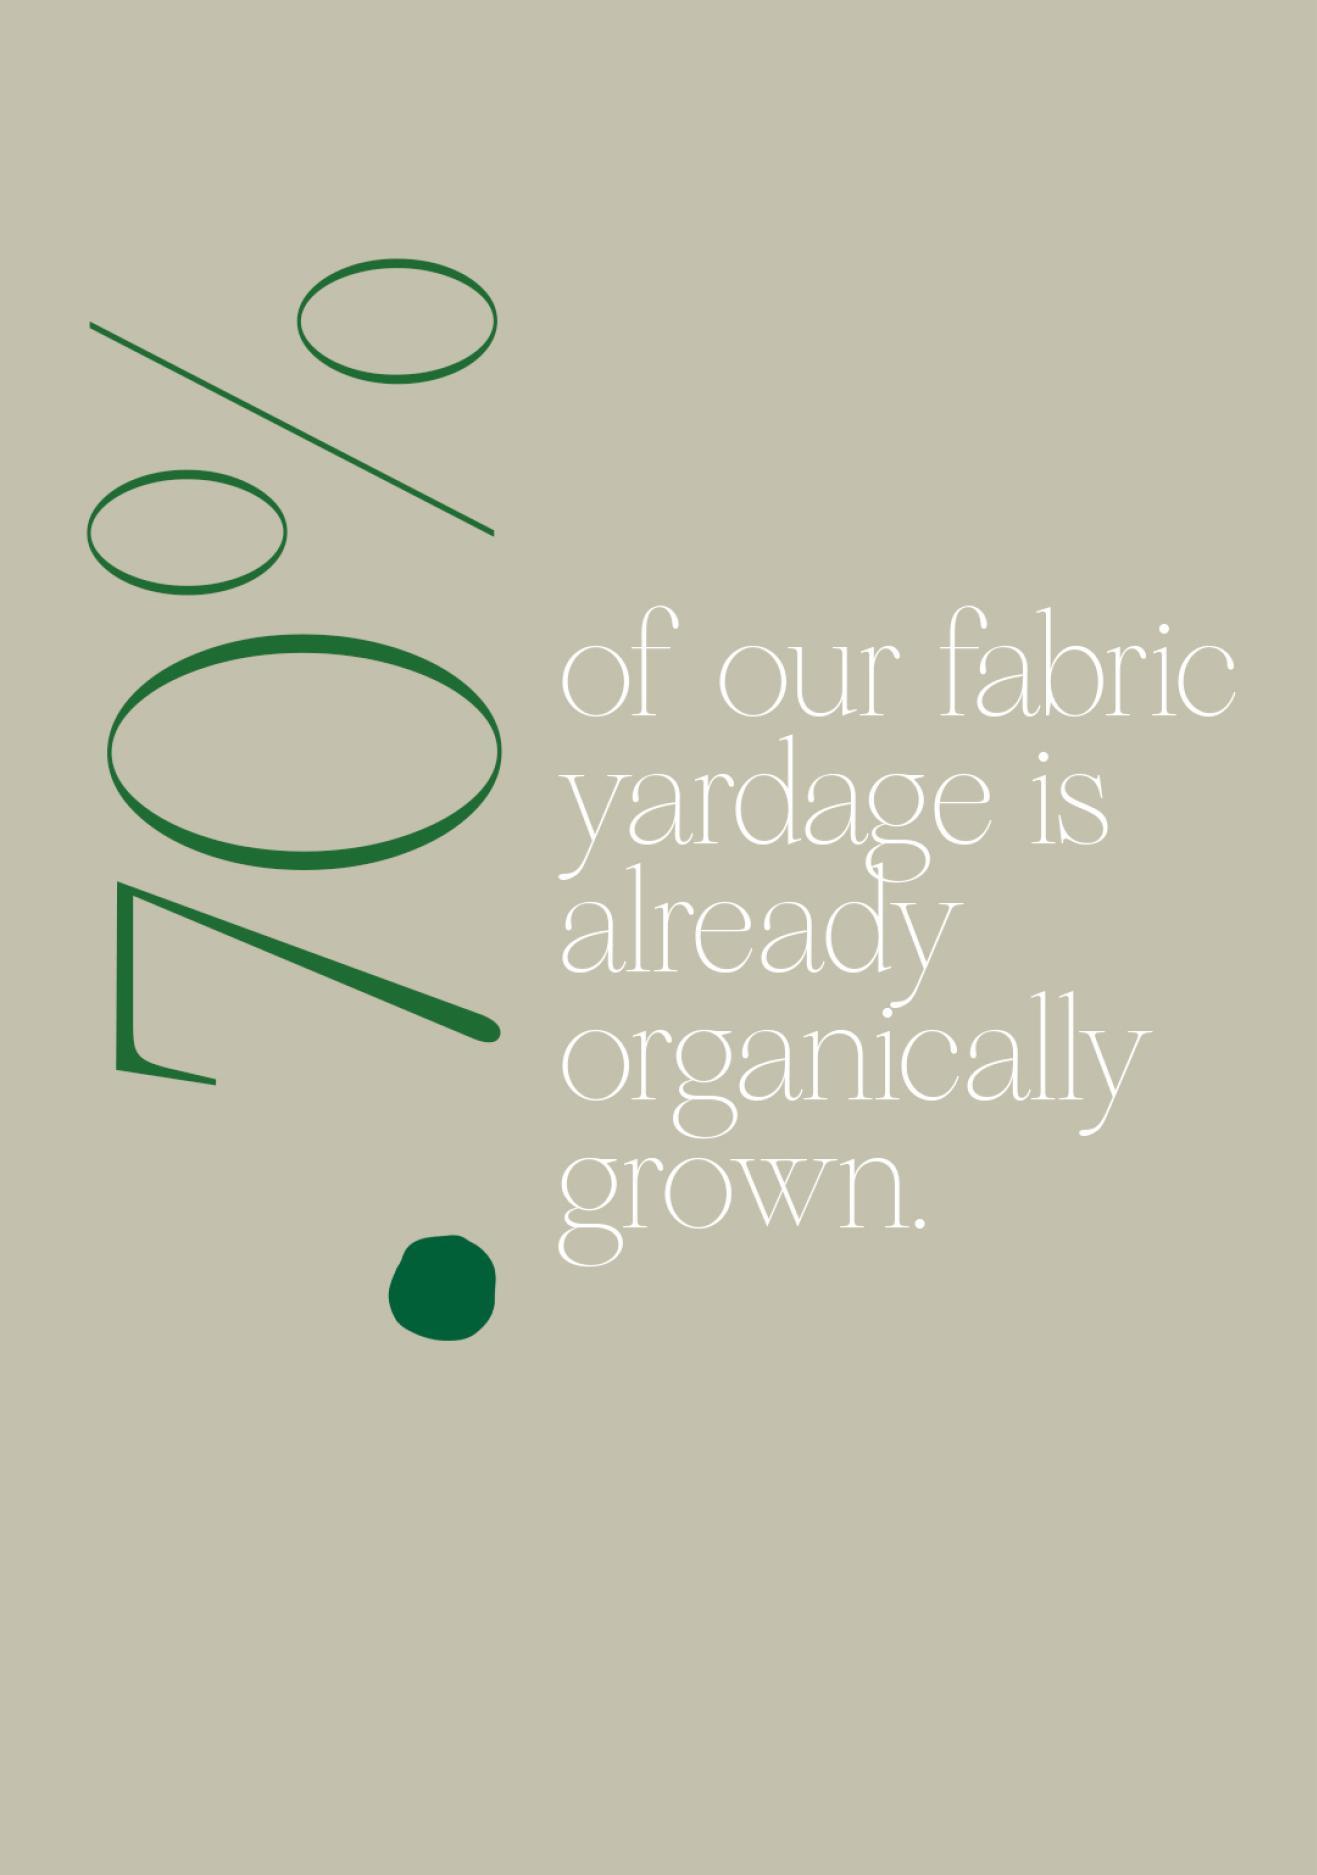 organicaly grown fabrics